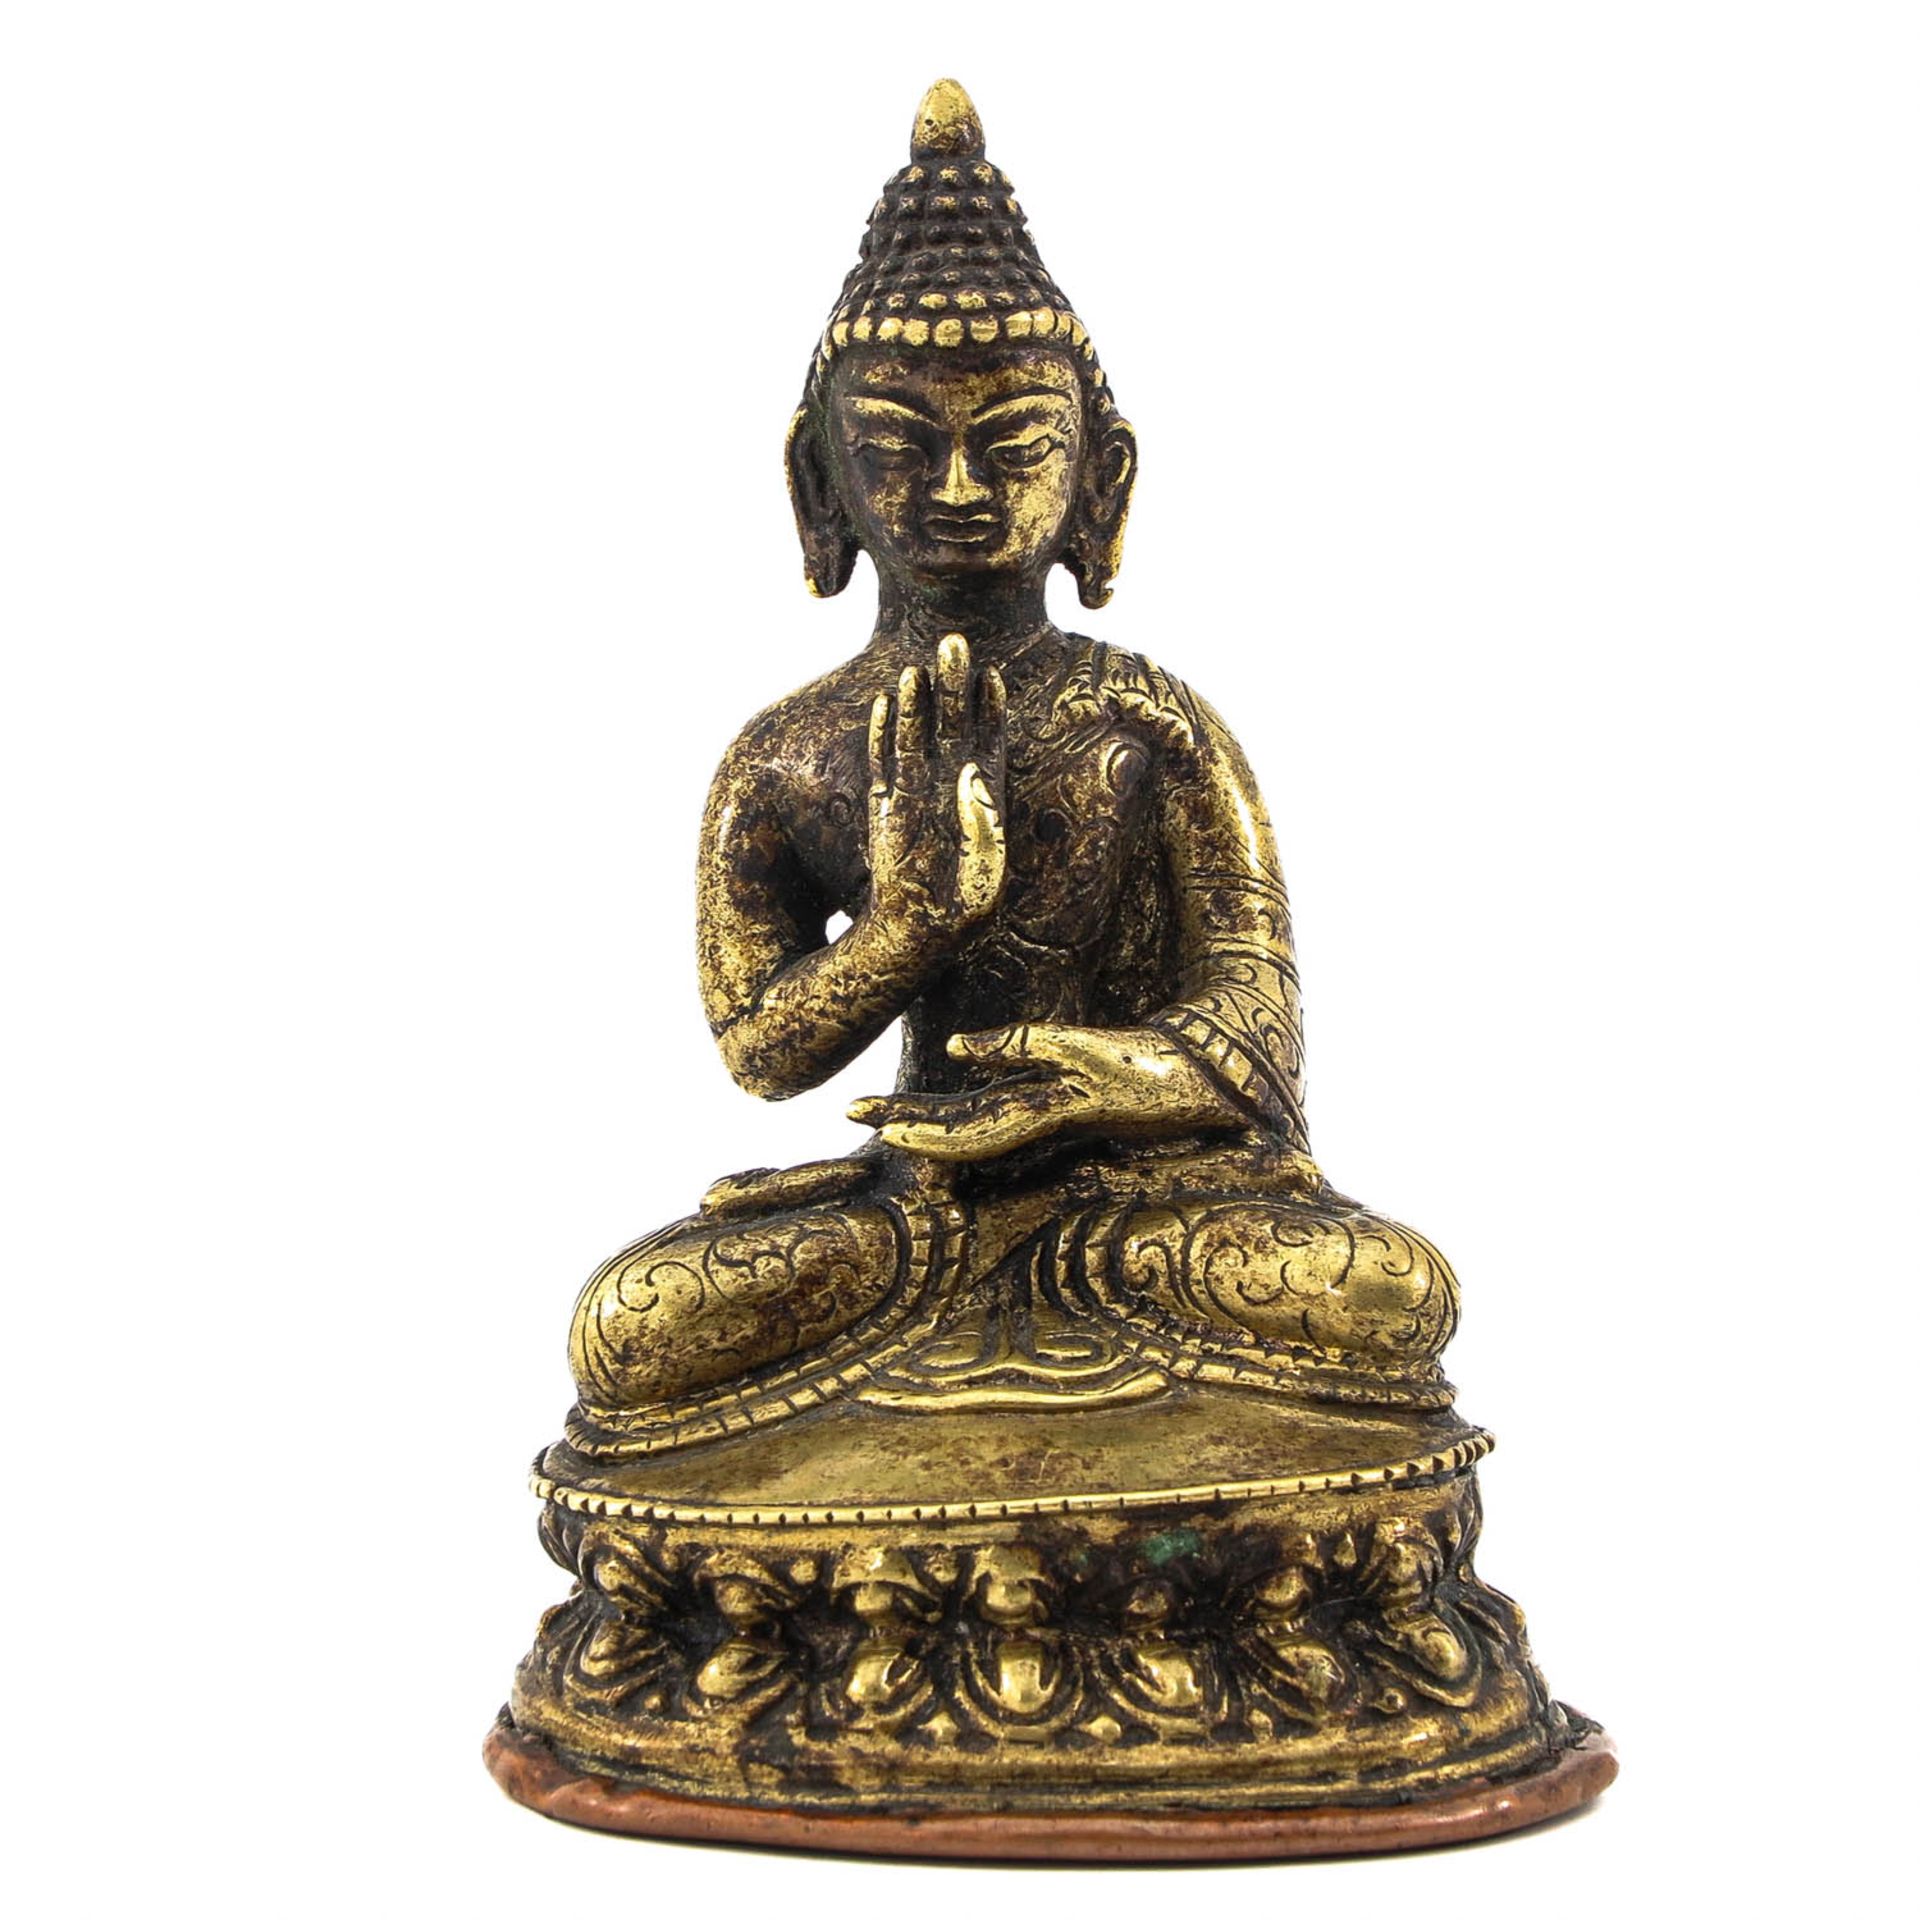 A Small Bronze Buddha